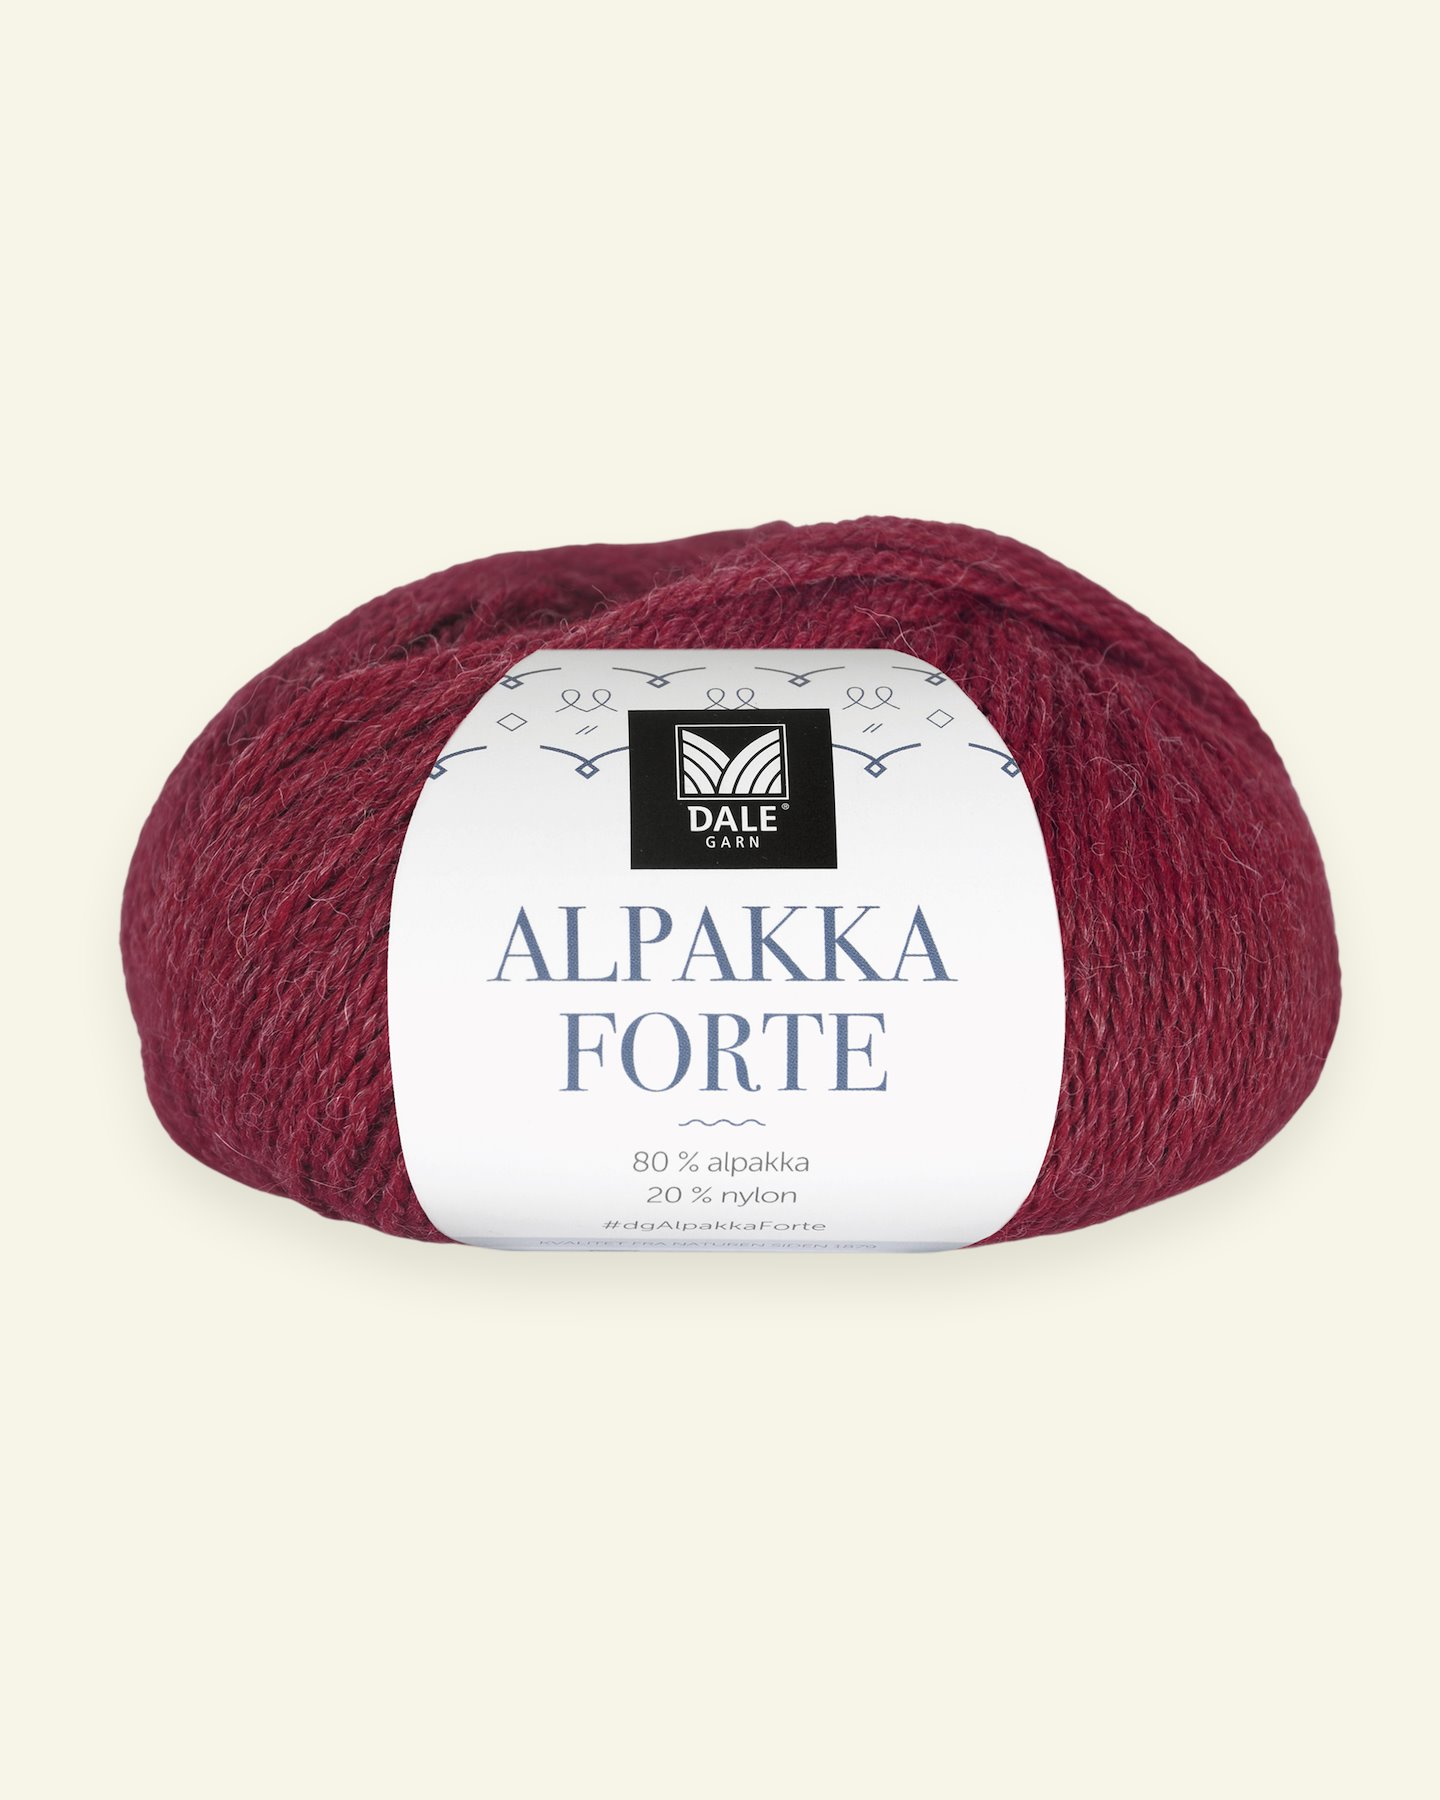 Dale Garn, alpackagarn "Alpakka Forte", varm röd mel. (724) 90000453_pack